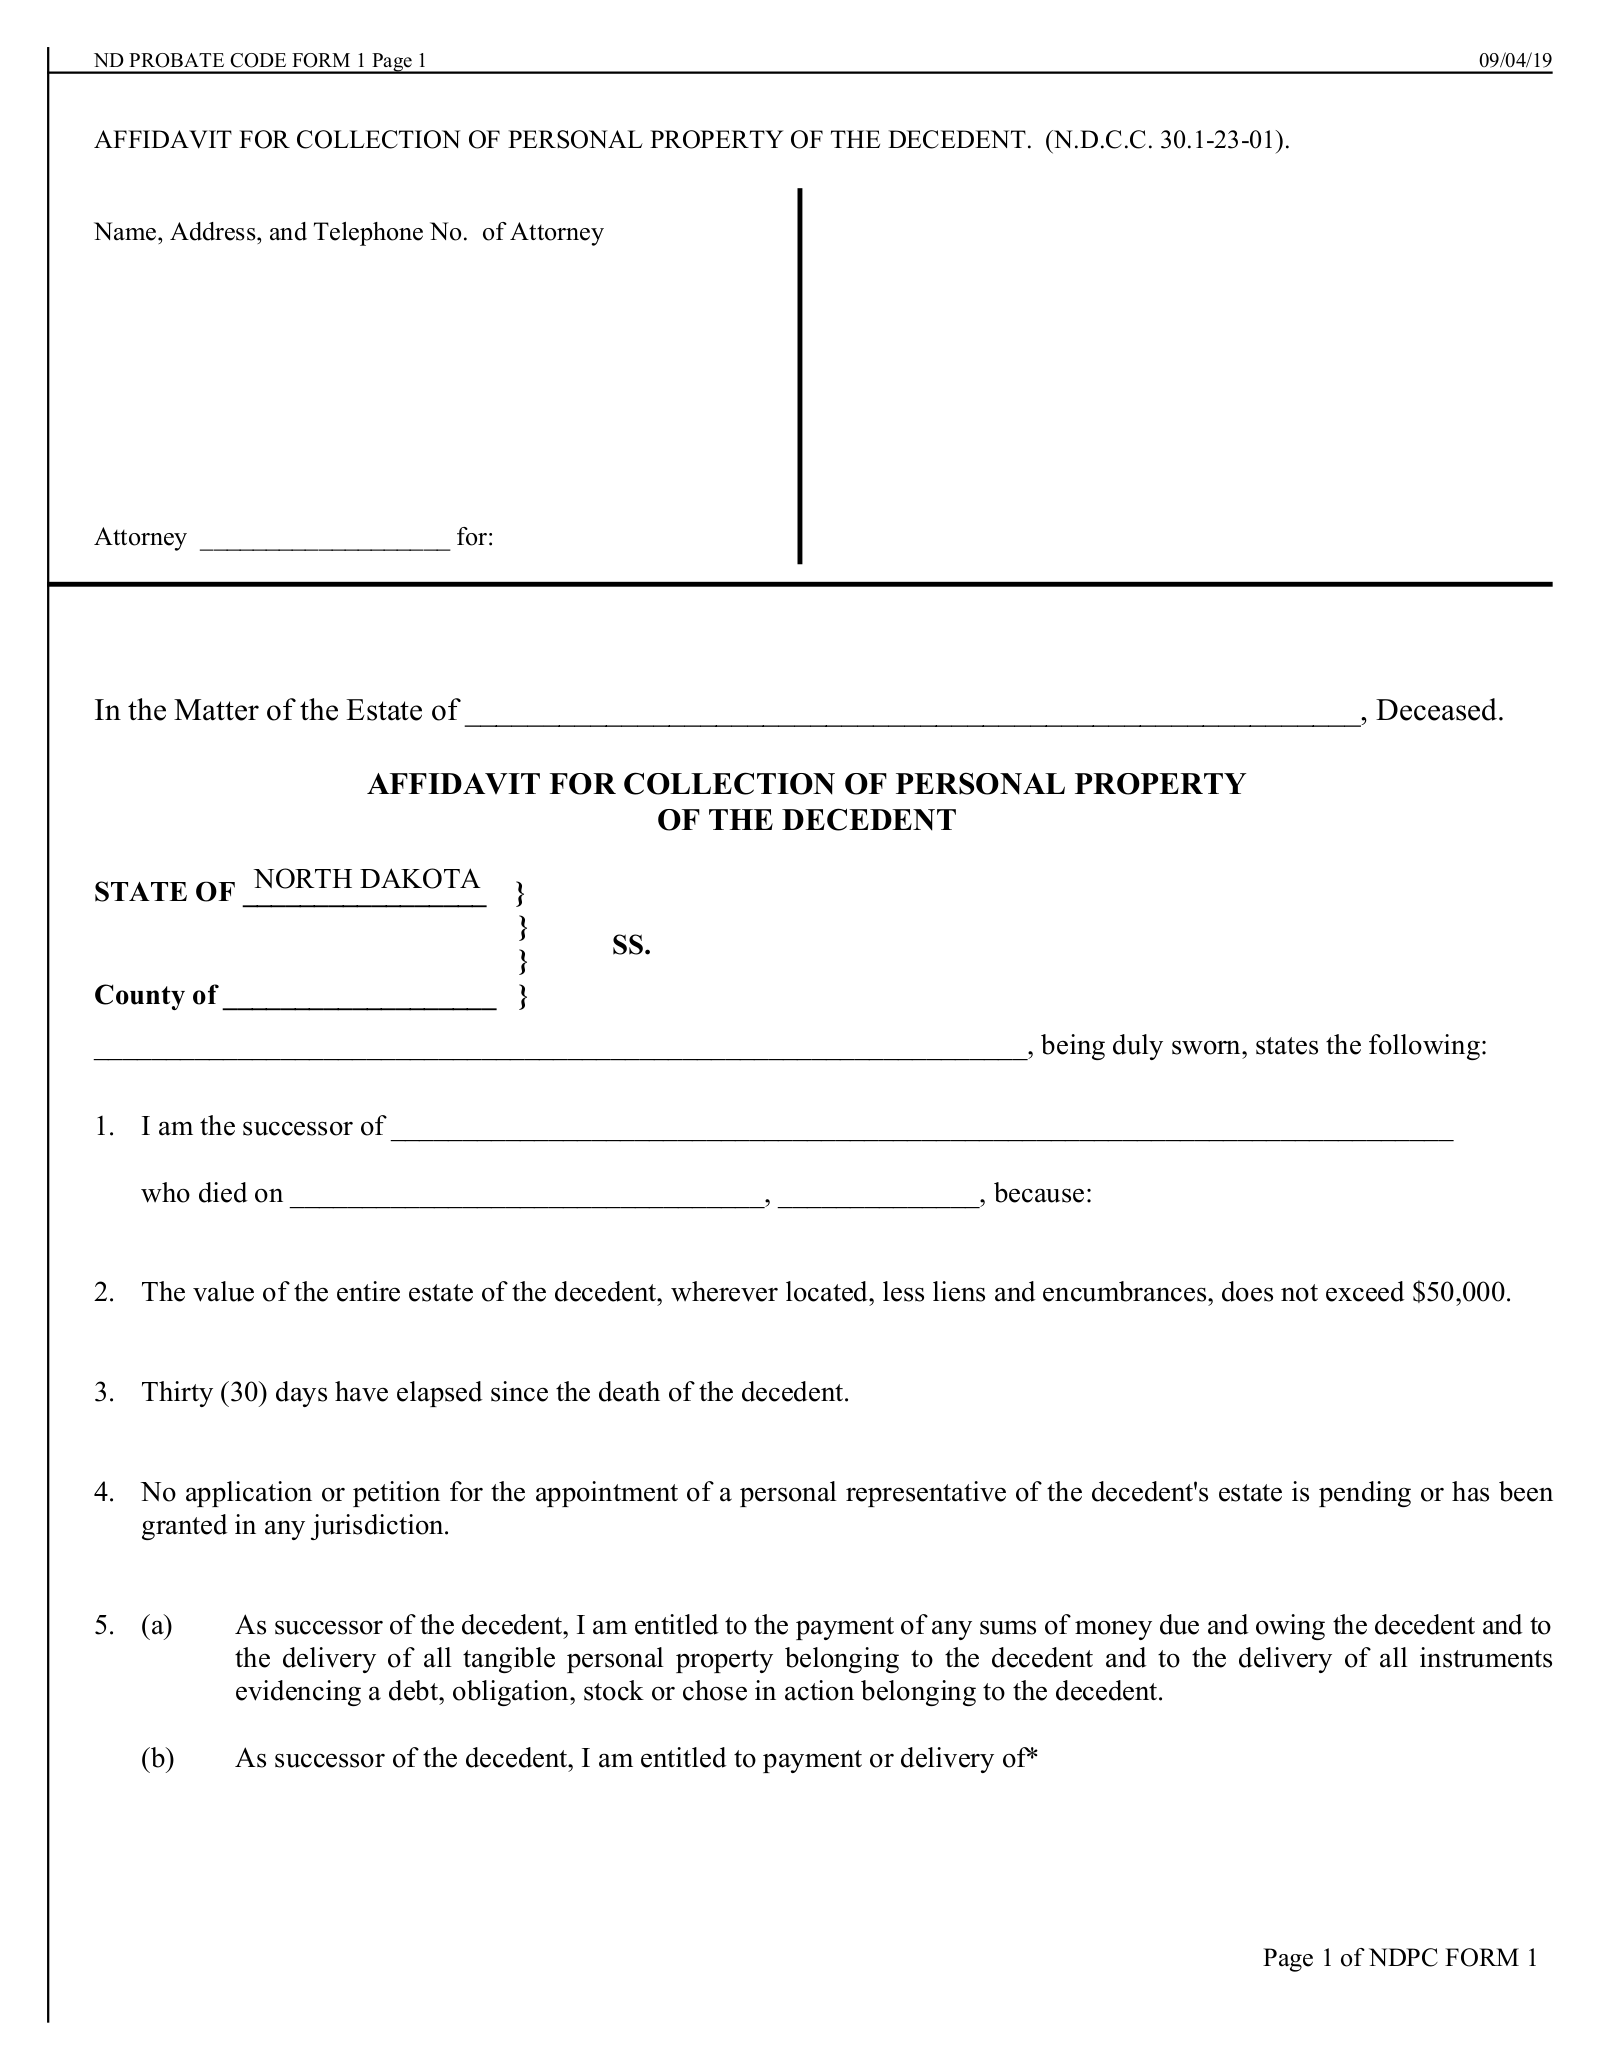 North Dakota Small Estate Affidavit | NDPC Form 1